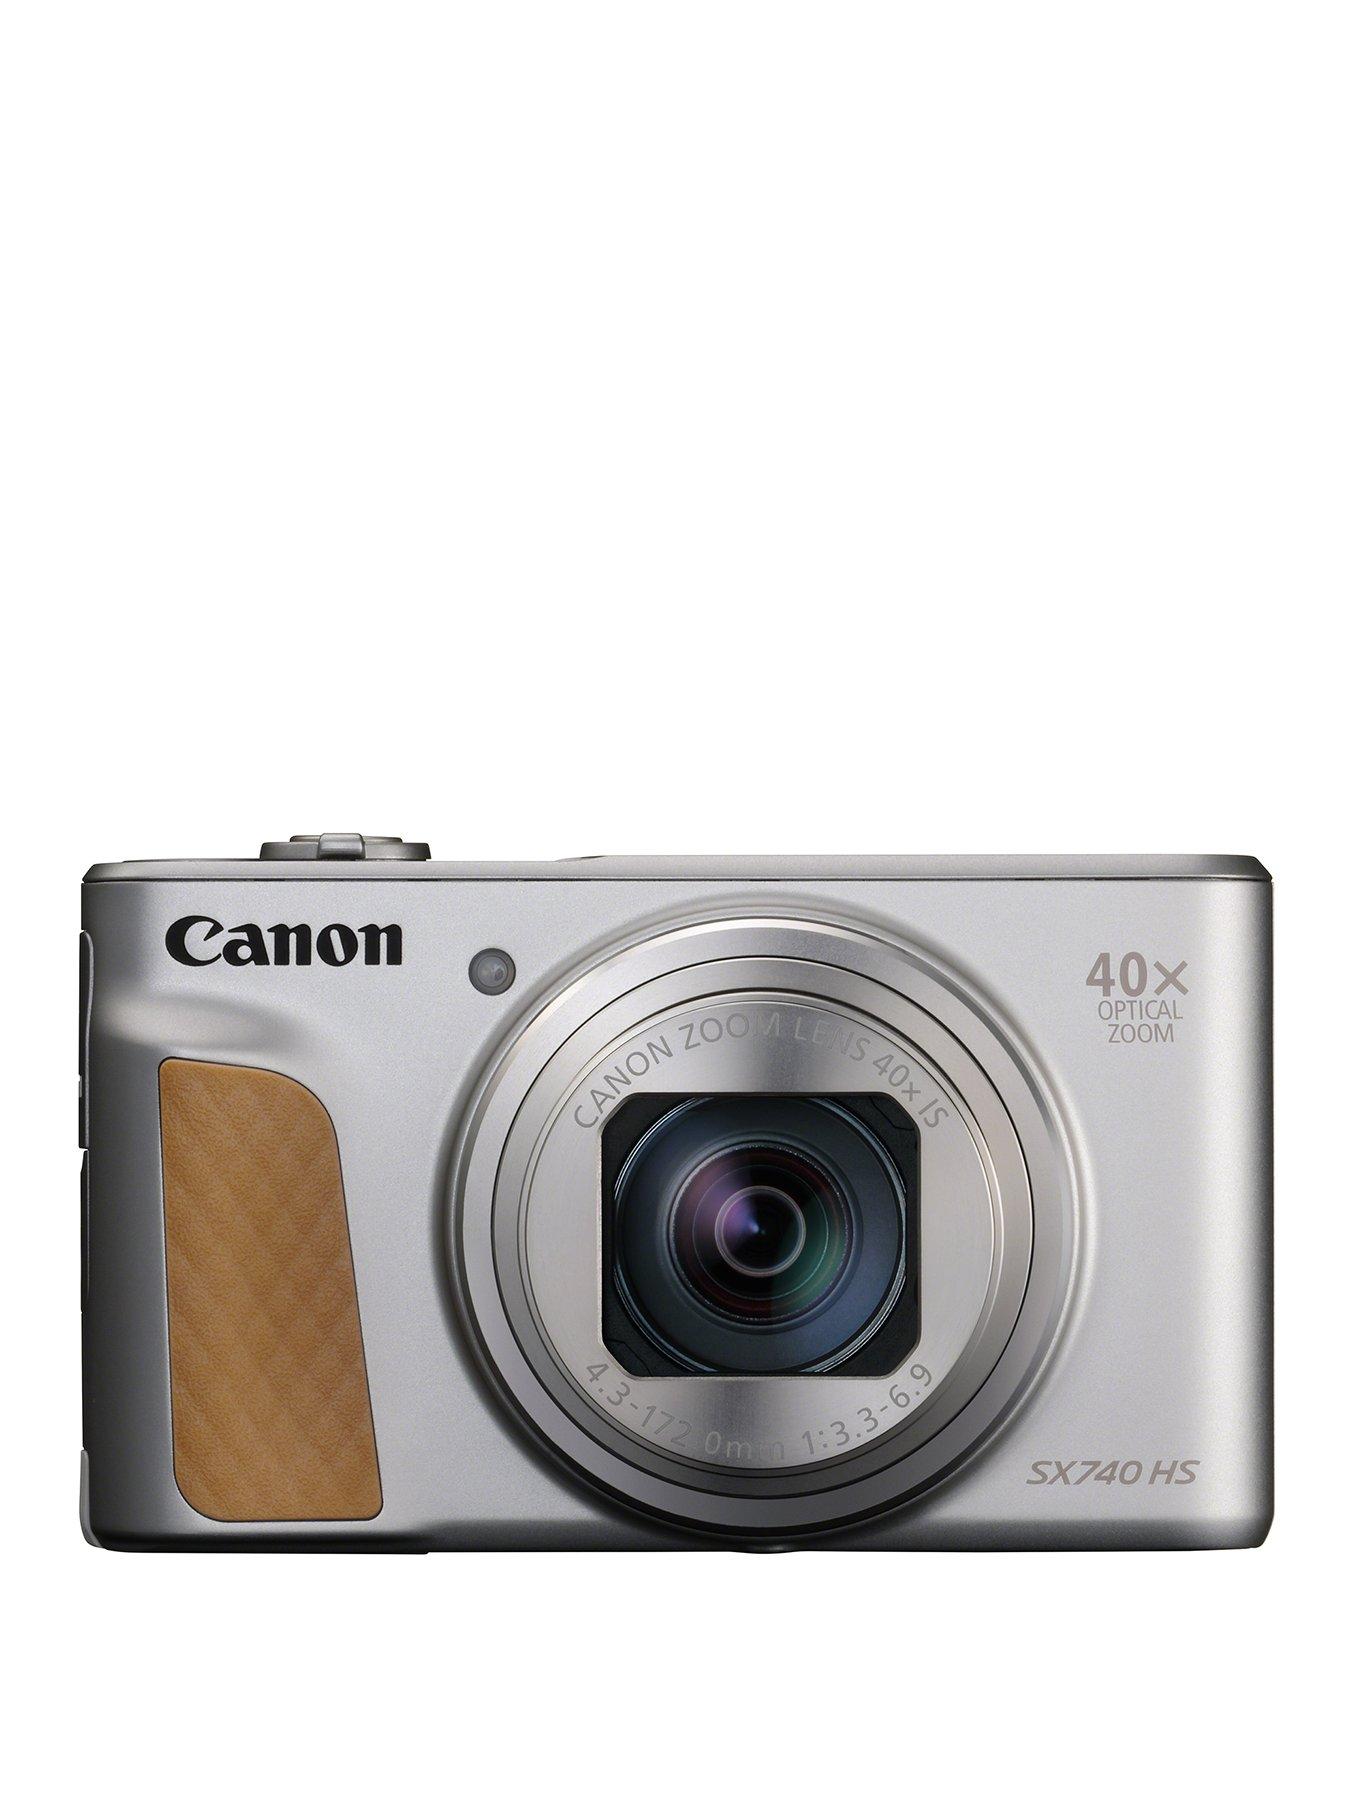 Canon Powershot Sx740 Hs 20.3 Megapixel Camera – Silver